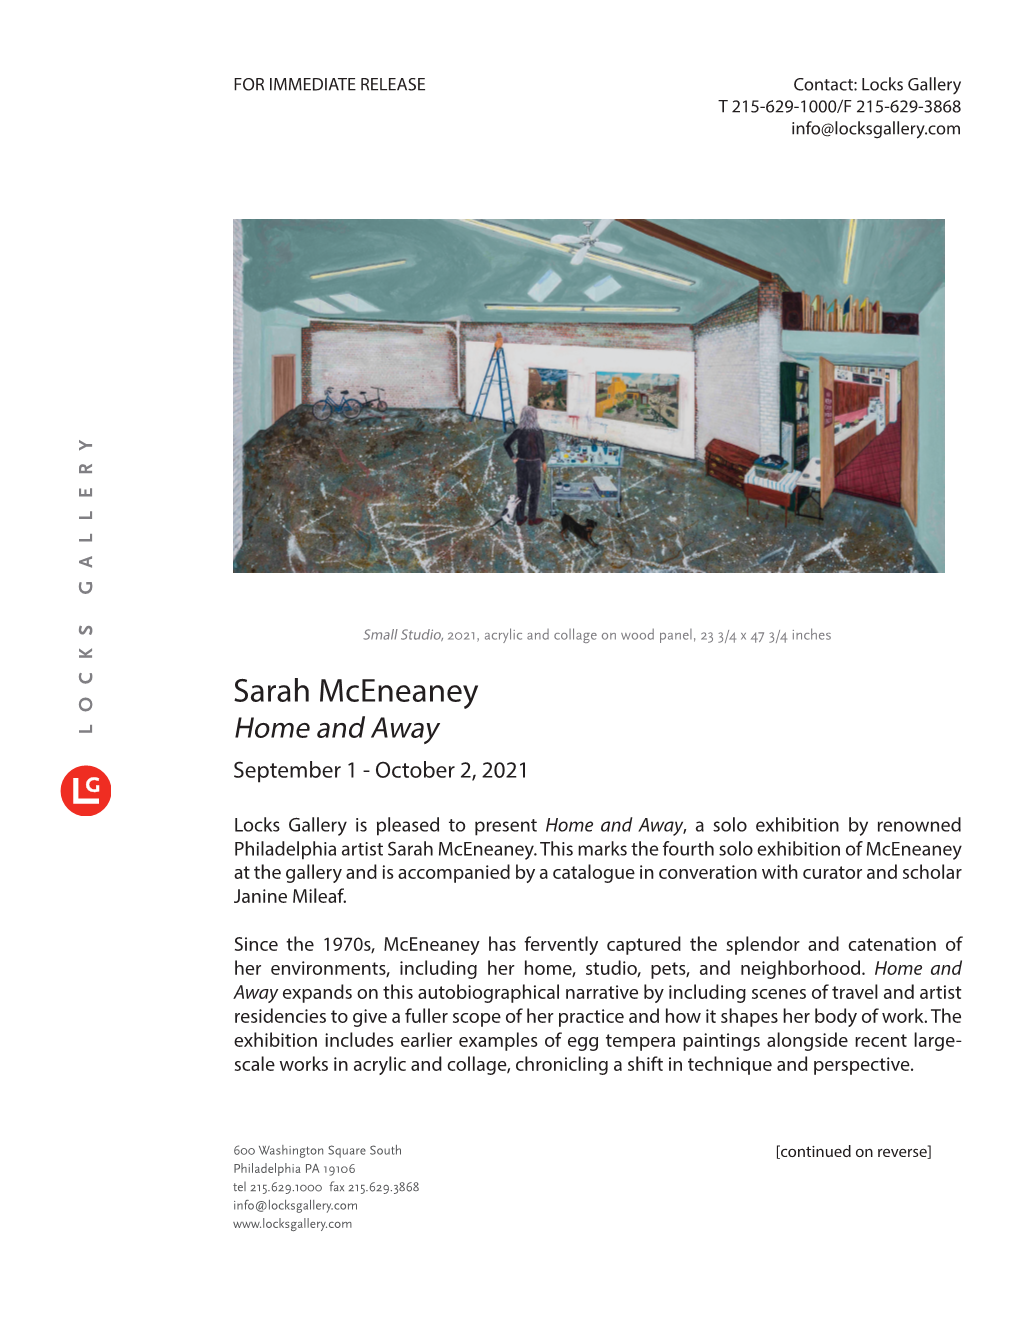 Sarah Mceneaney Home and Away September 1 - October 2, 2021